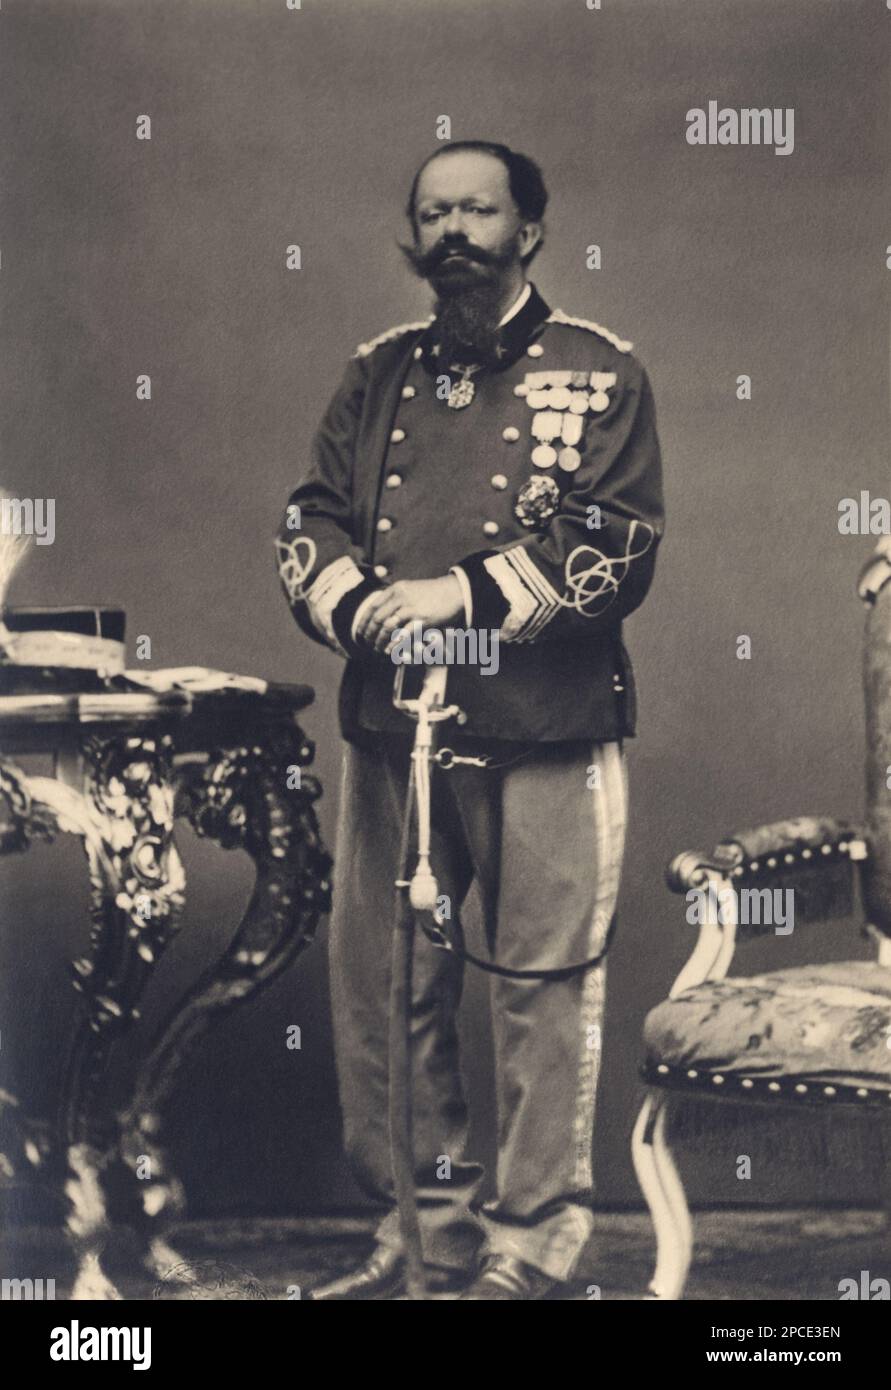 1870 Ca, ITALIEN : der italienische König VITTORIO EMANUELE II di SAVOIA ( 1820 - 1888 ). - ITALIA - CASA SAVOIA - REALI - Nobiltà ITALIANA - SAVOY - ADEL - KÖNIGSFAMILIE - GESCHICHTE - FOTO STORICHE - Königsfamilie - nobili - Nobiltà - Portrait - ritratto - Baffi - Schnurrbart - Bart - barba - Militäruniform - Divisa uniforme militare - Medaillen - medaglie - spada - Schwert --- Archivio GBB Stockfoto